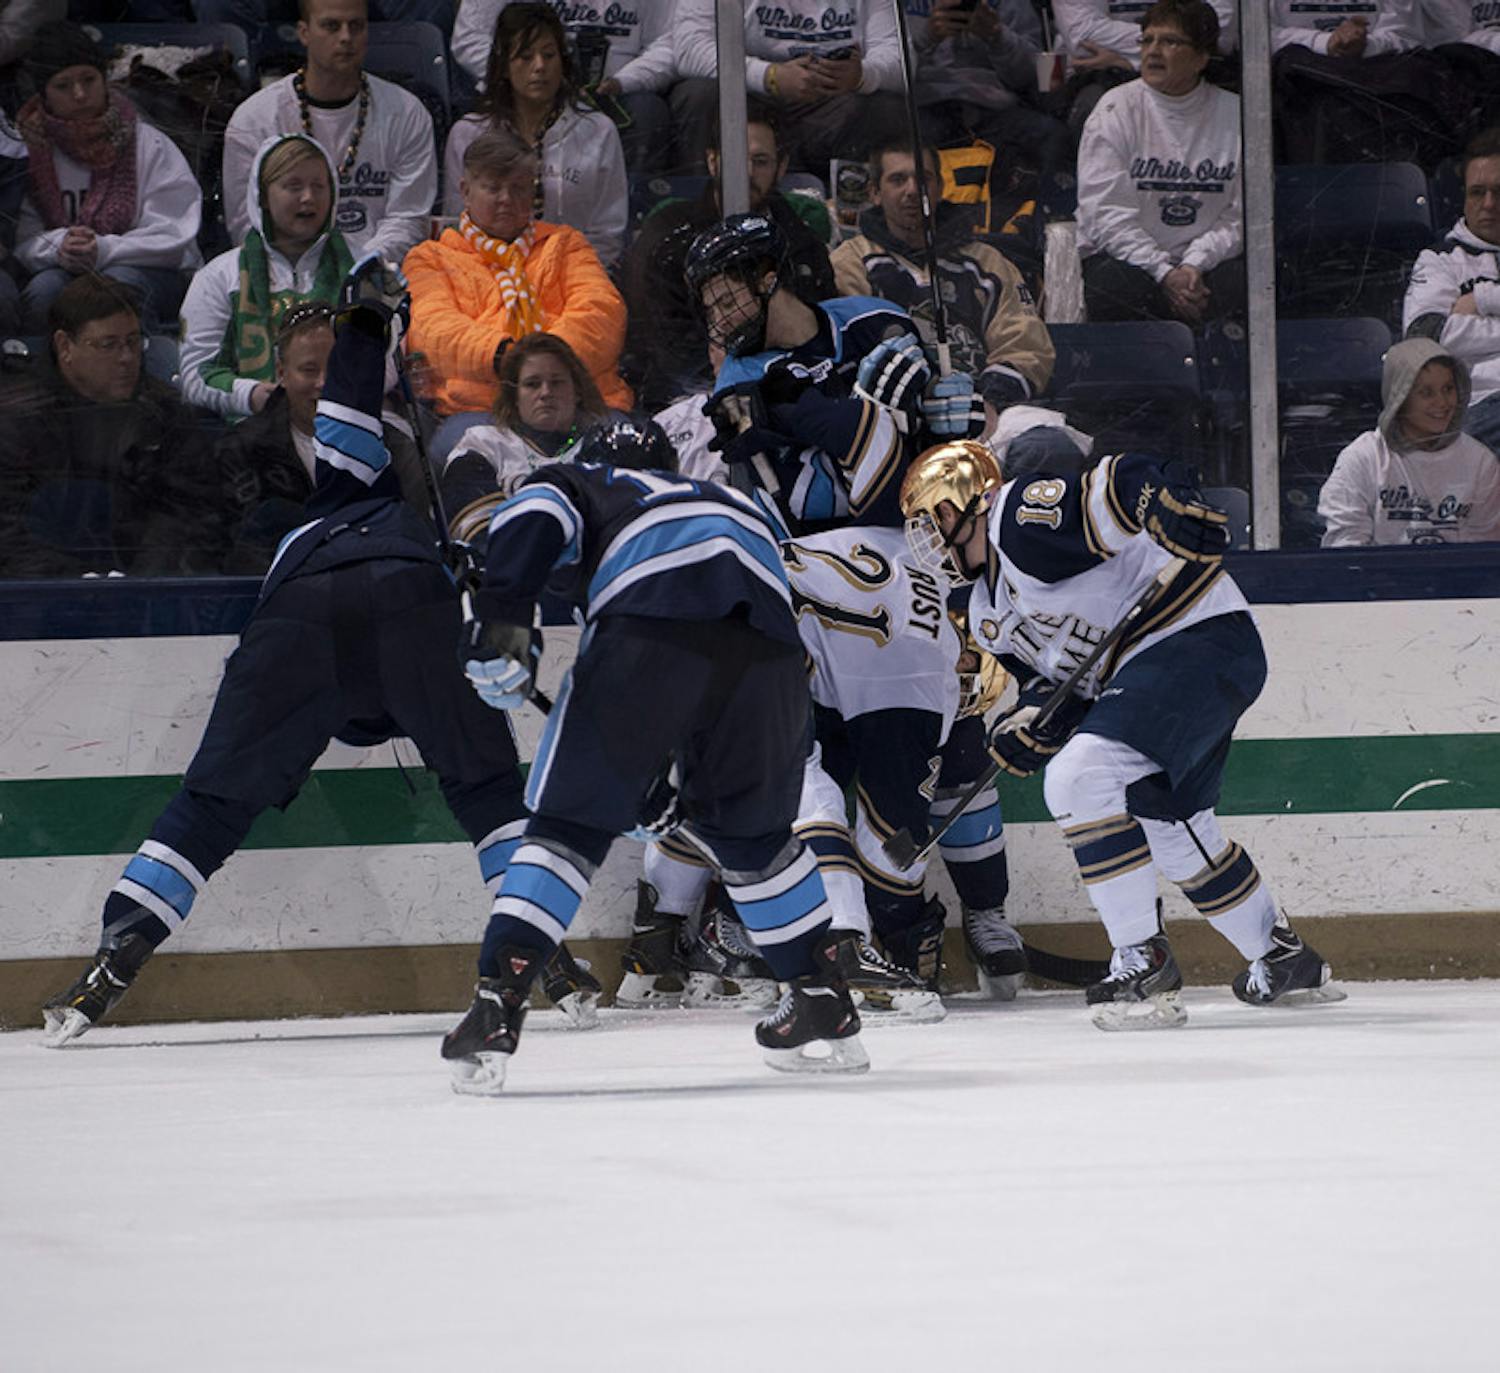 Hockey-Rust-AND-Tynan-0207-vs-Maine-shot-by-Michael-Yu